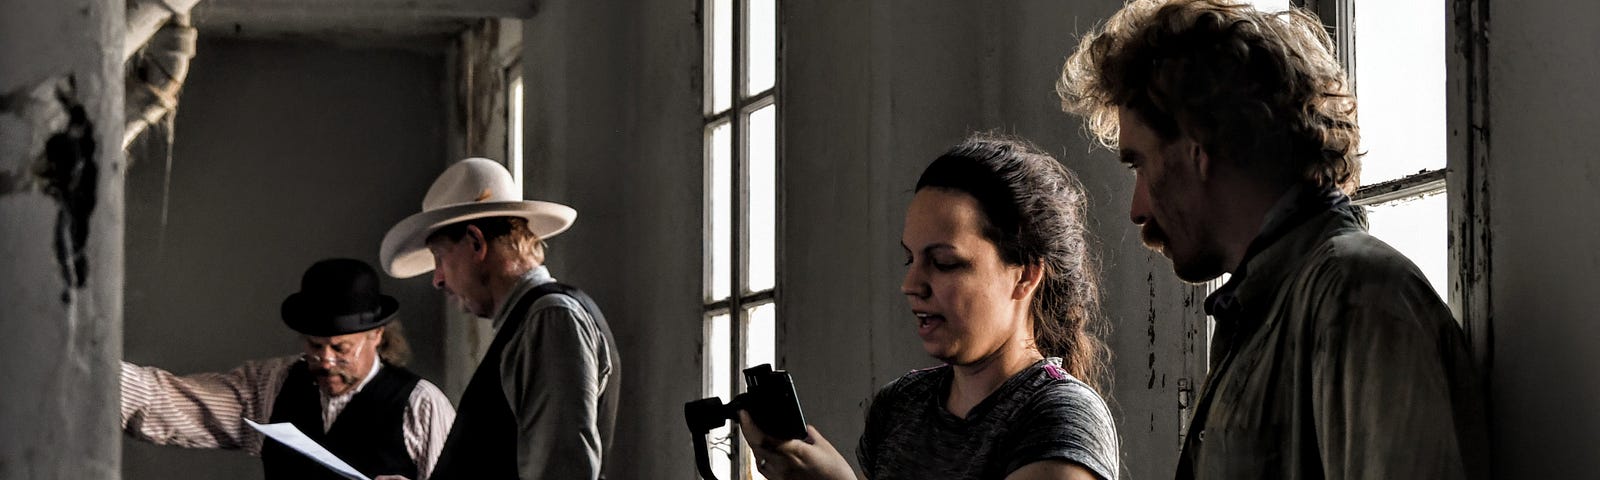 Sushila Kandola (cinematographer) and Travis Mills discuss a shot at the historical jail in Globe, Arizona.